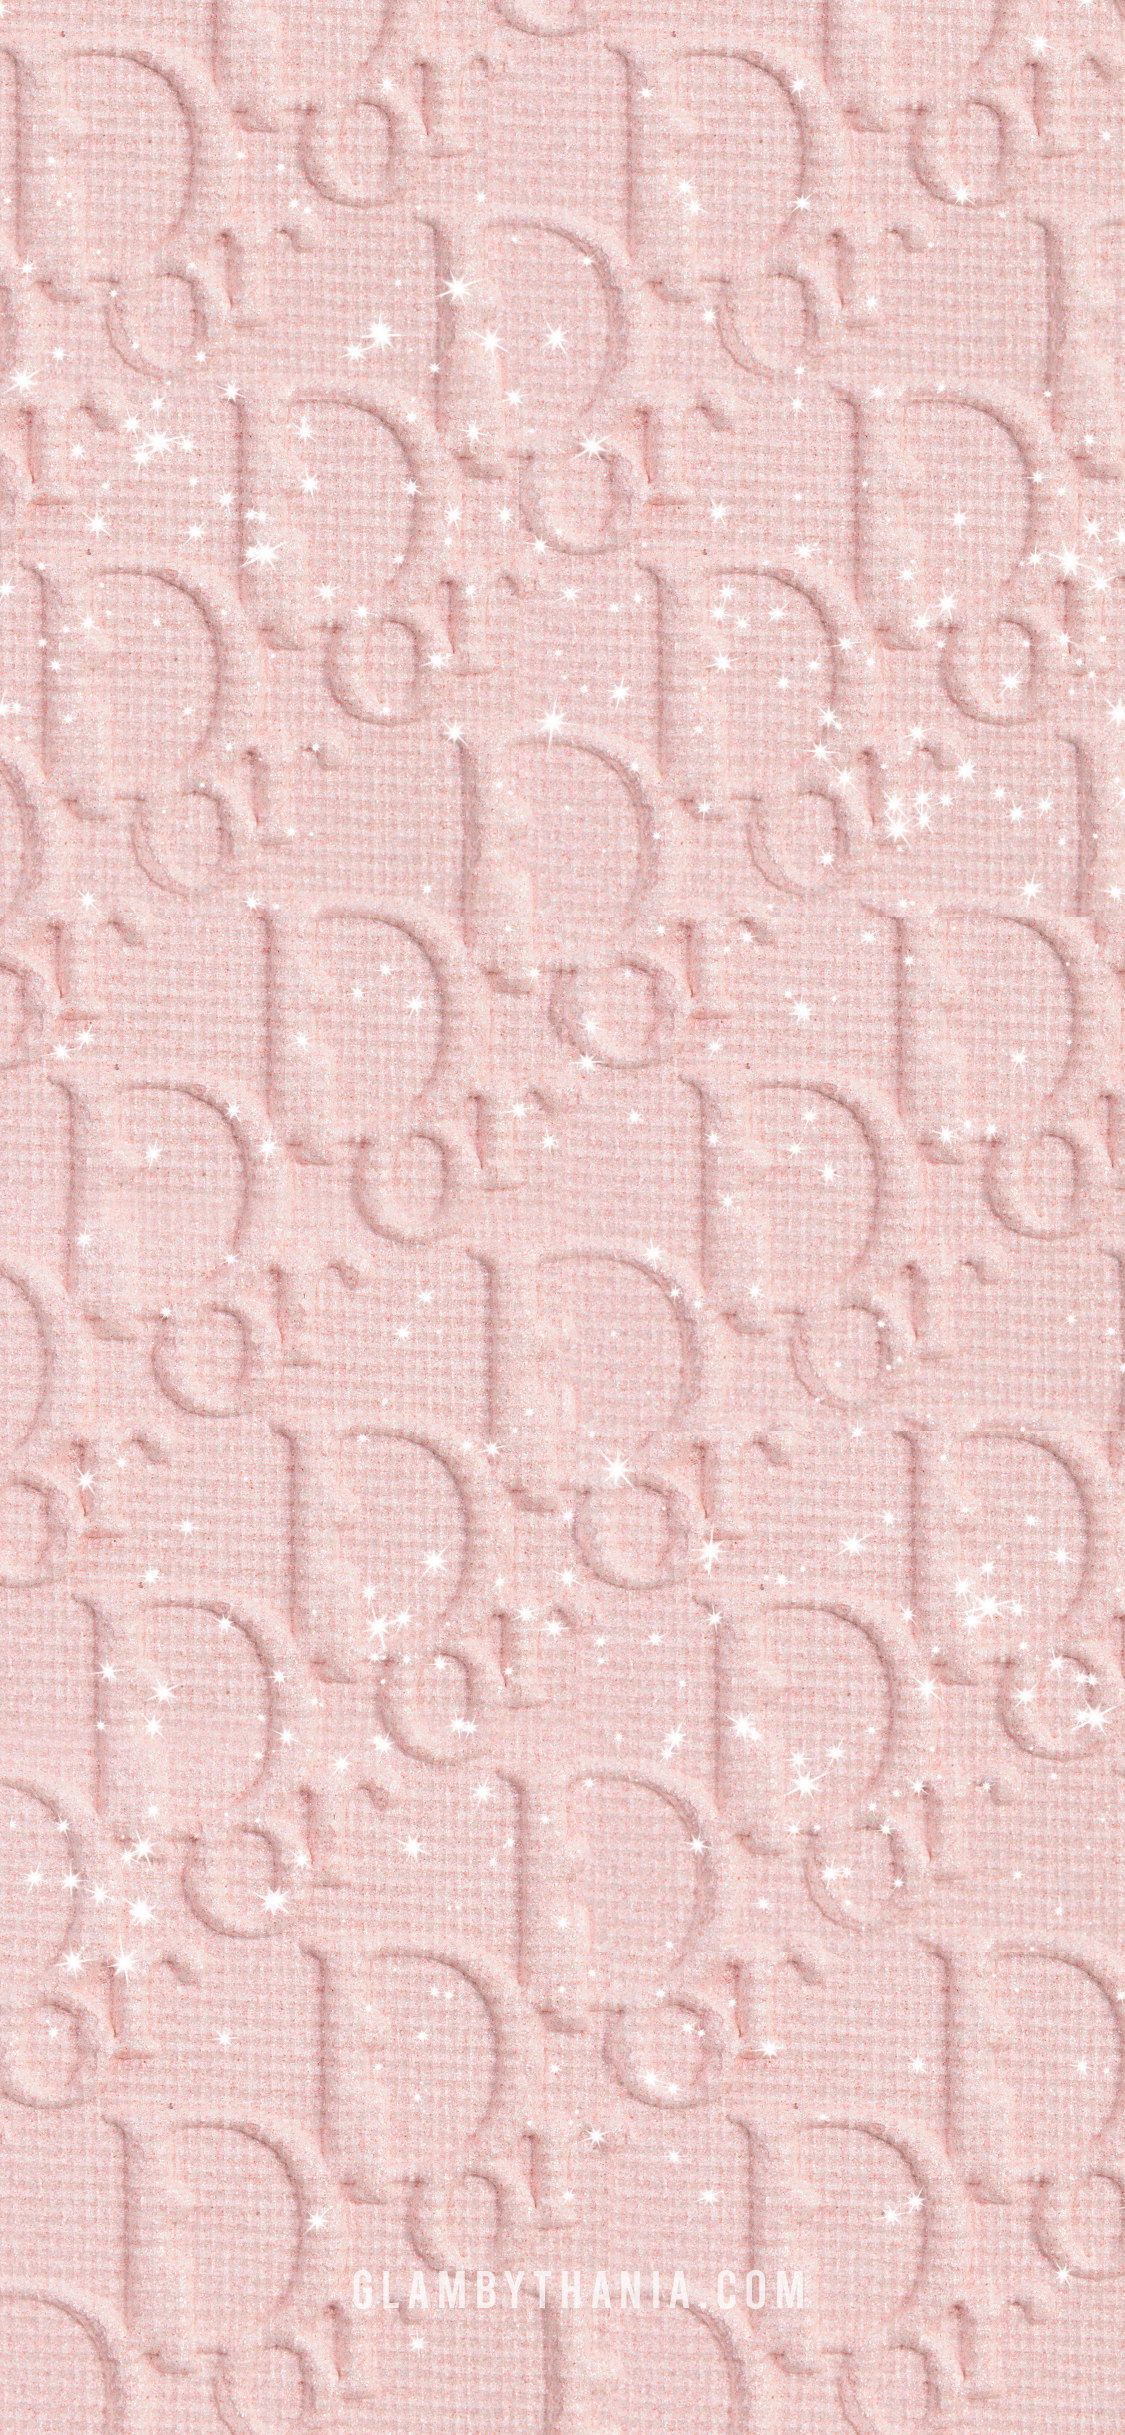 Designer Girly Pink iPhone Wallpaper